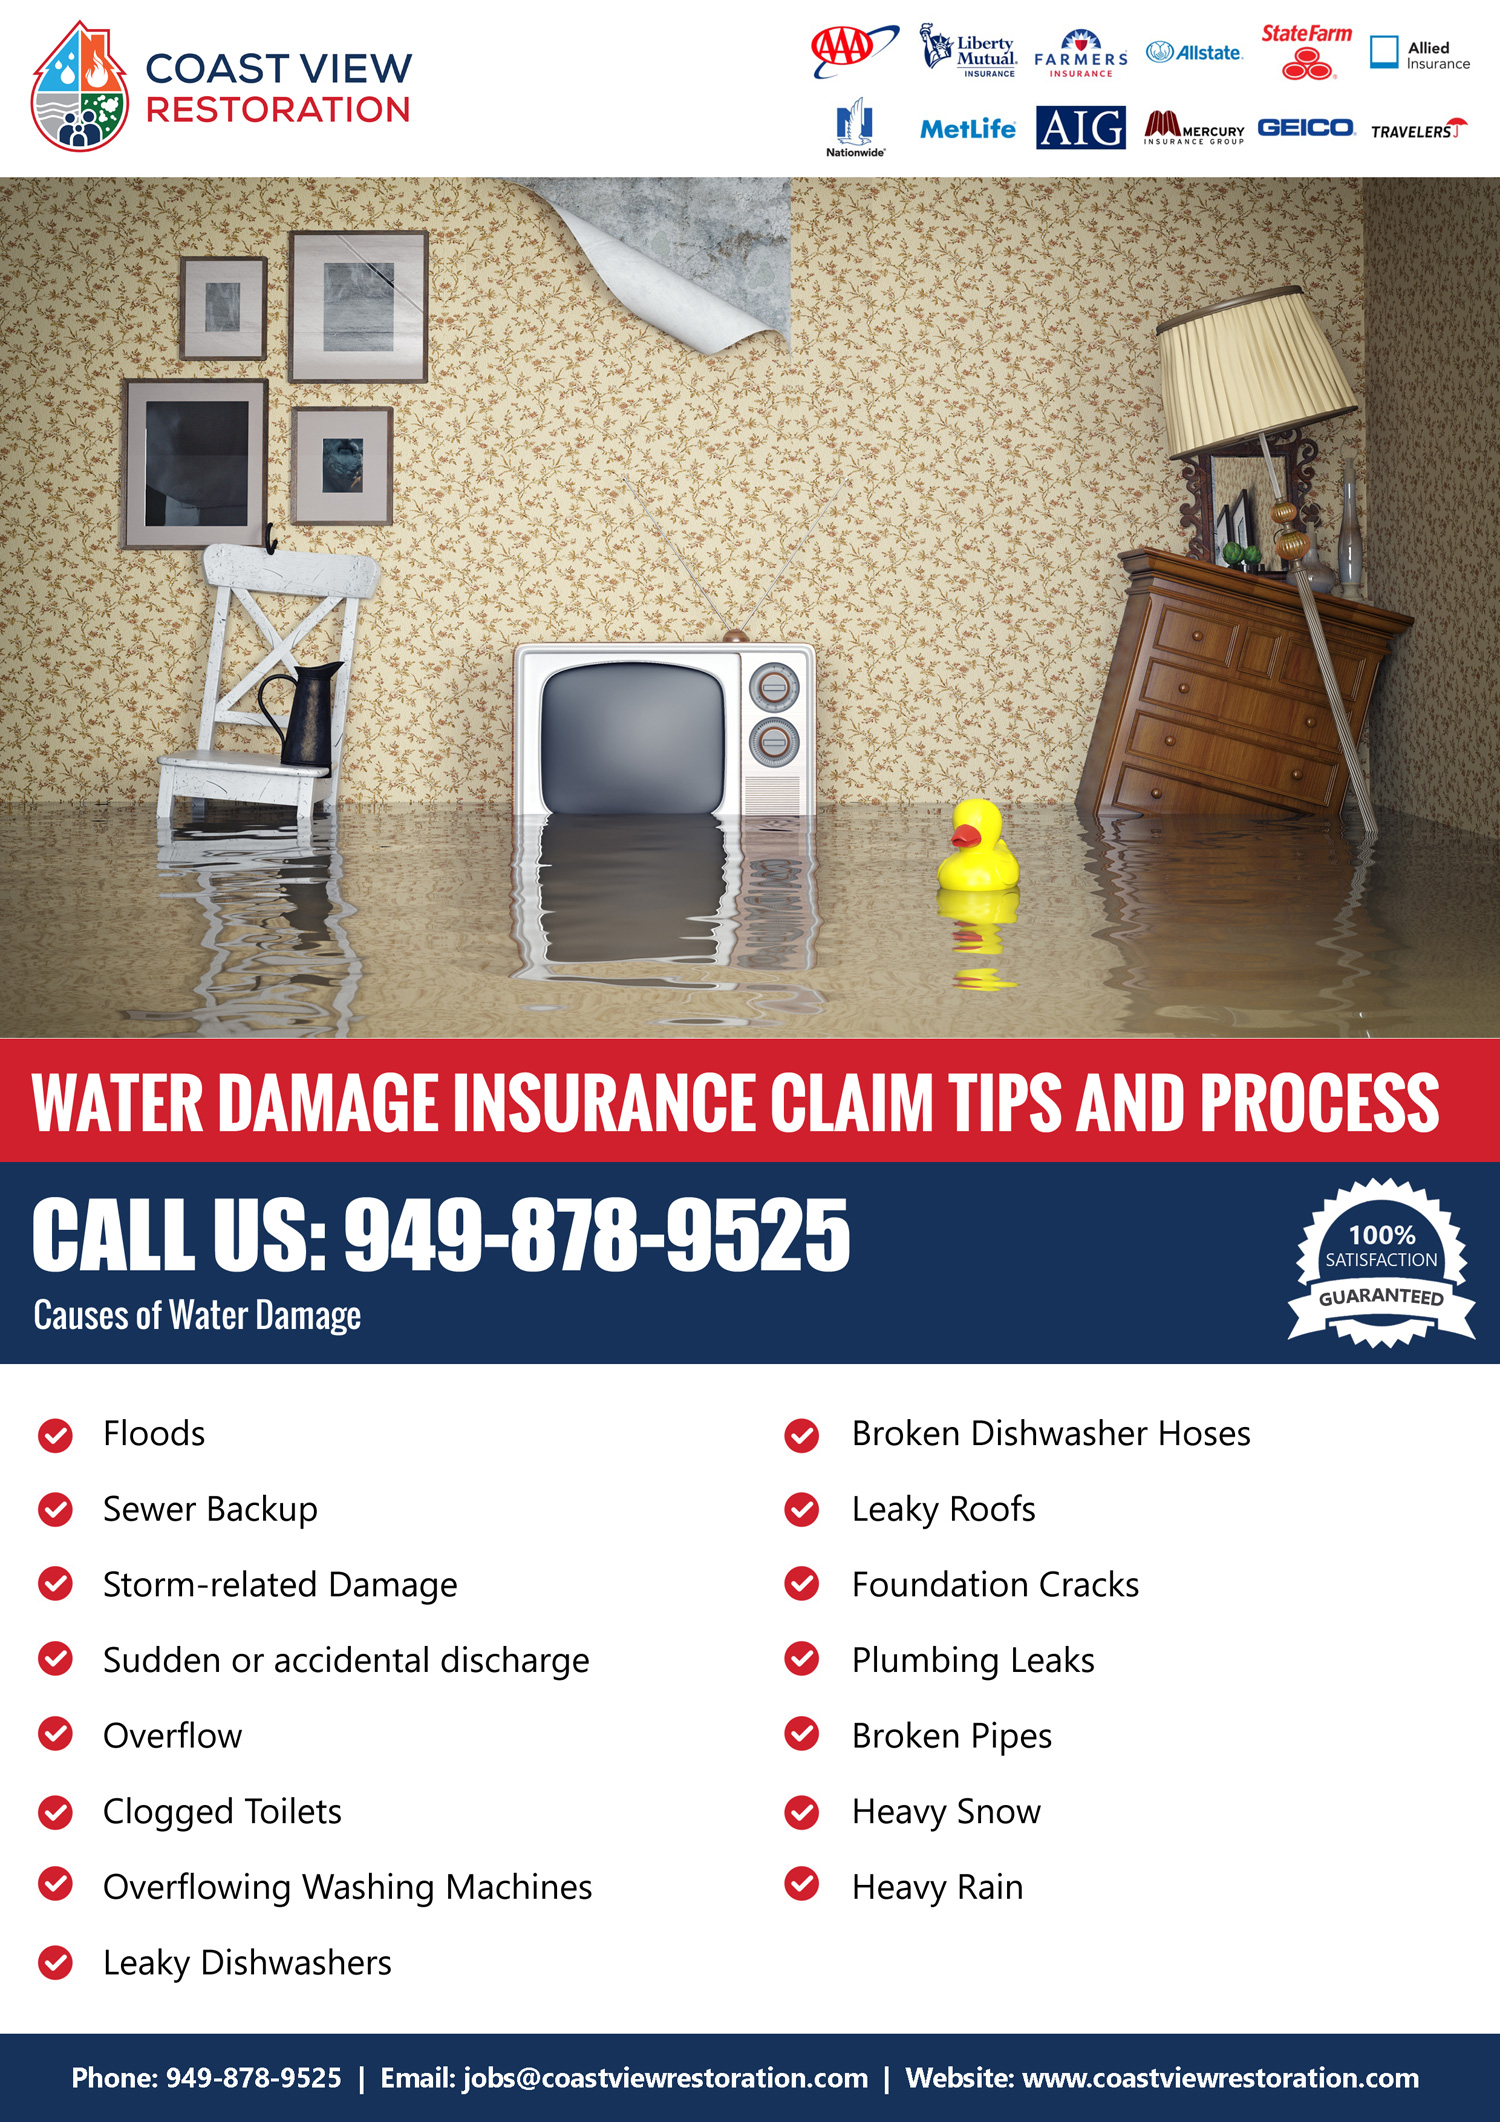 travel trailer water damage insurance claim